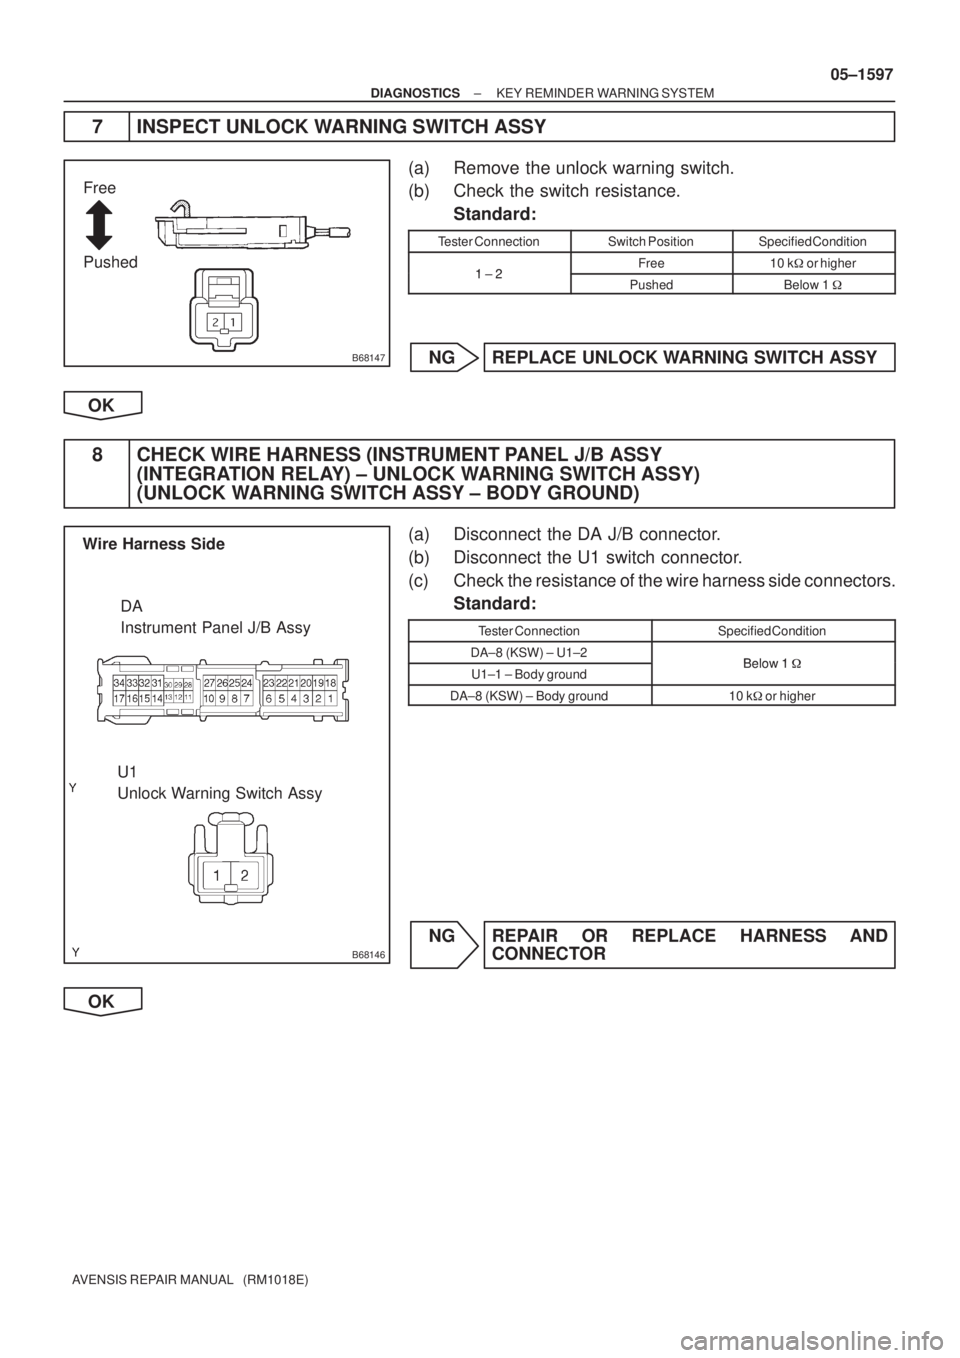 TOYOTA AVENSIS 2005  Service Repair Manual B68147
Pushed Free
B68146
DA 
Instrument Panel J/B Assy Wire Harness Side
U1 
Unlock Warning Switch Assy
± DIAGNOSTICSKEY REMINDER WARNING SYSTEM
05±1597
AVENSIS REPAIR MANUAL   (RM1018E)
7 INSPECT 